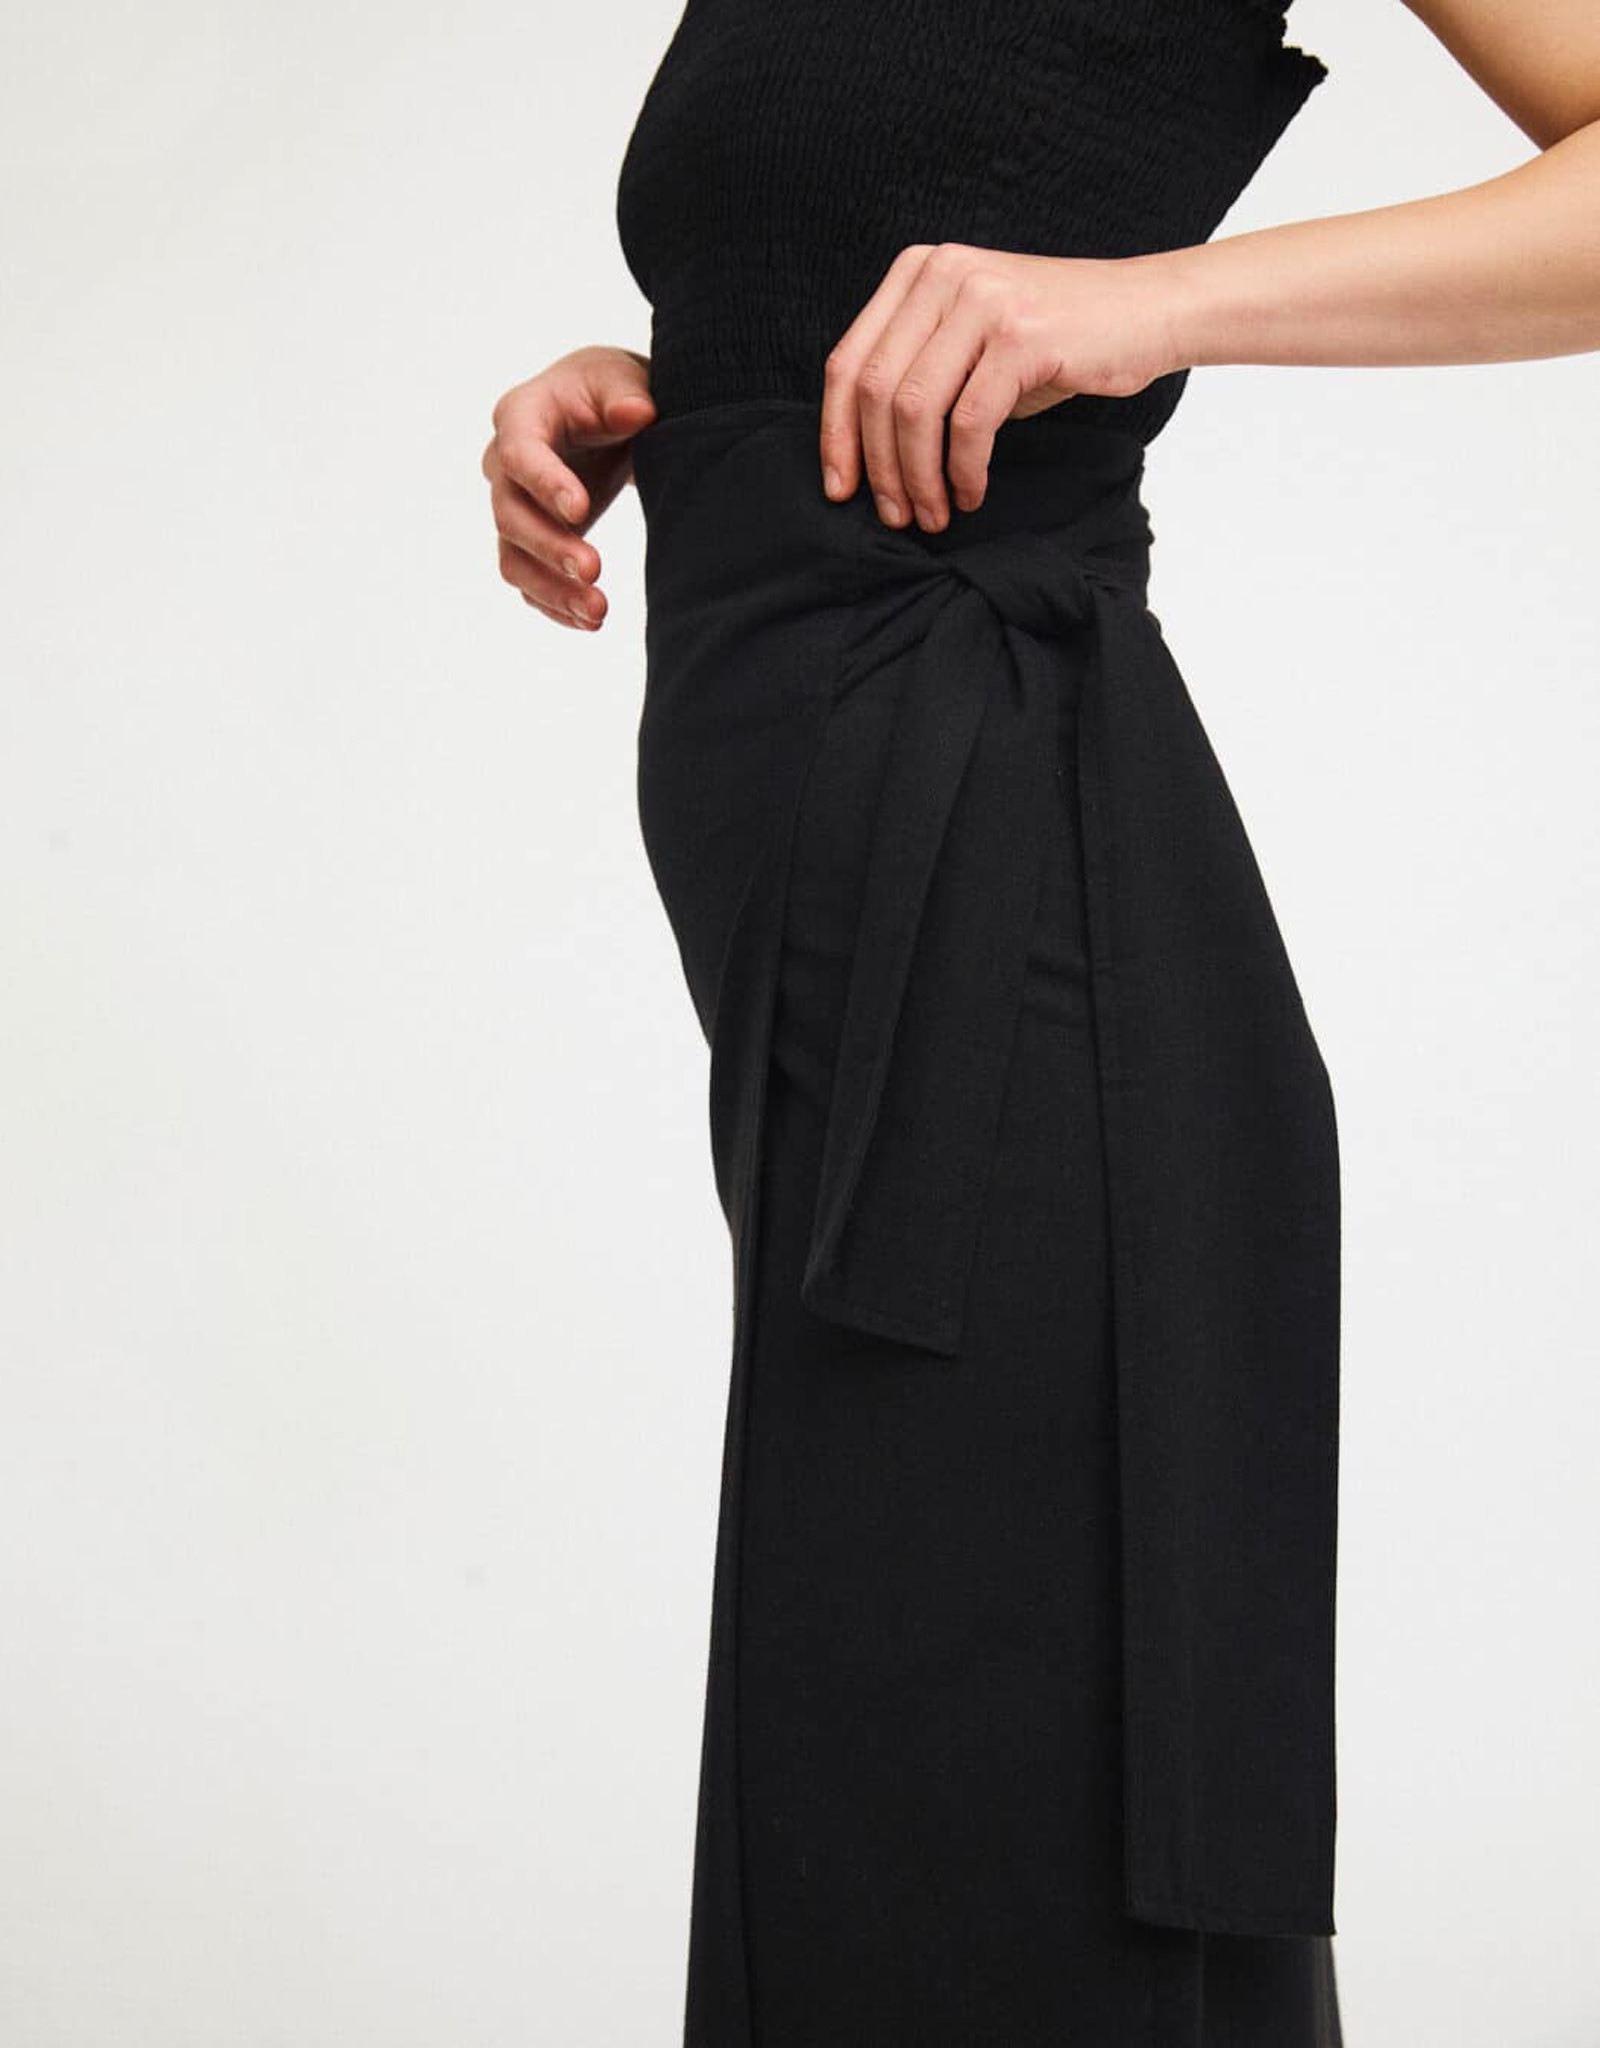 Rita Row Grace Pareo Skirt in Black